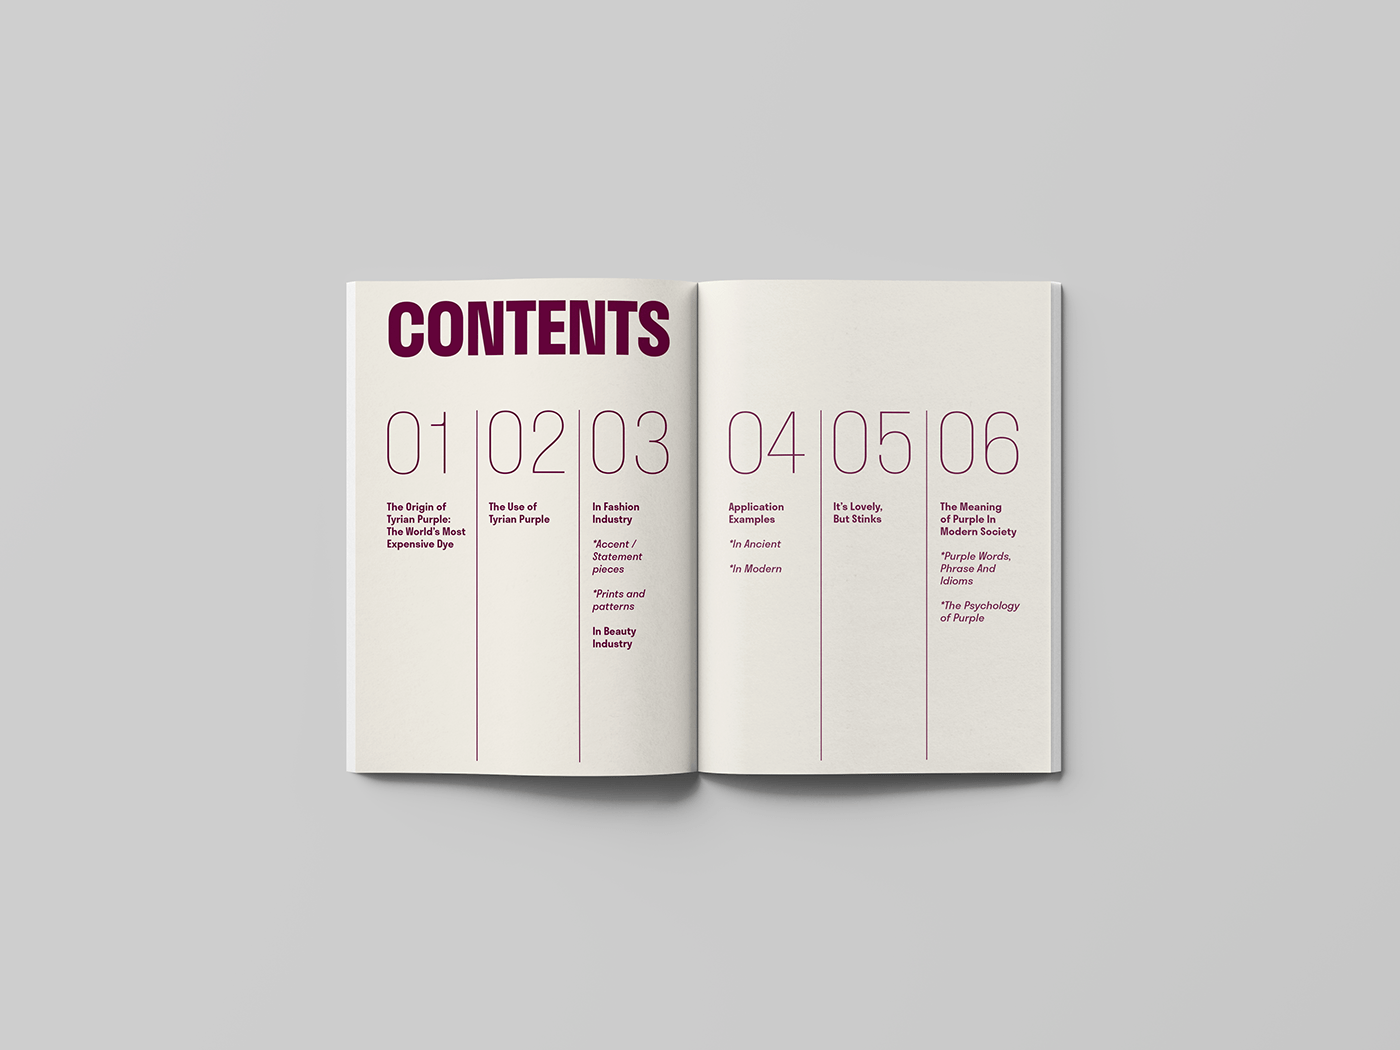 edtorial Layout InDesign book design color typography   Graphic Designer adobe illustrator tyrian purple